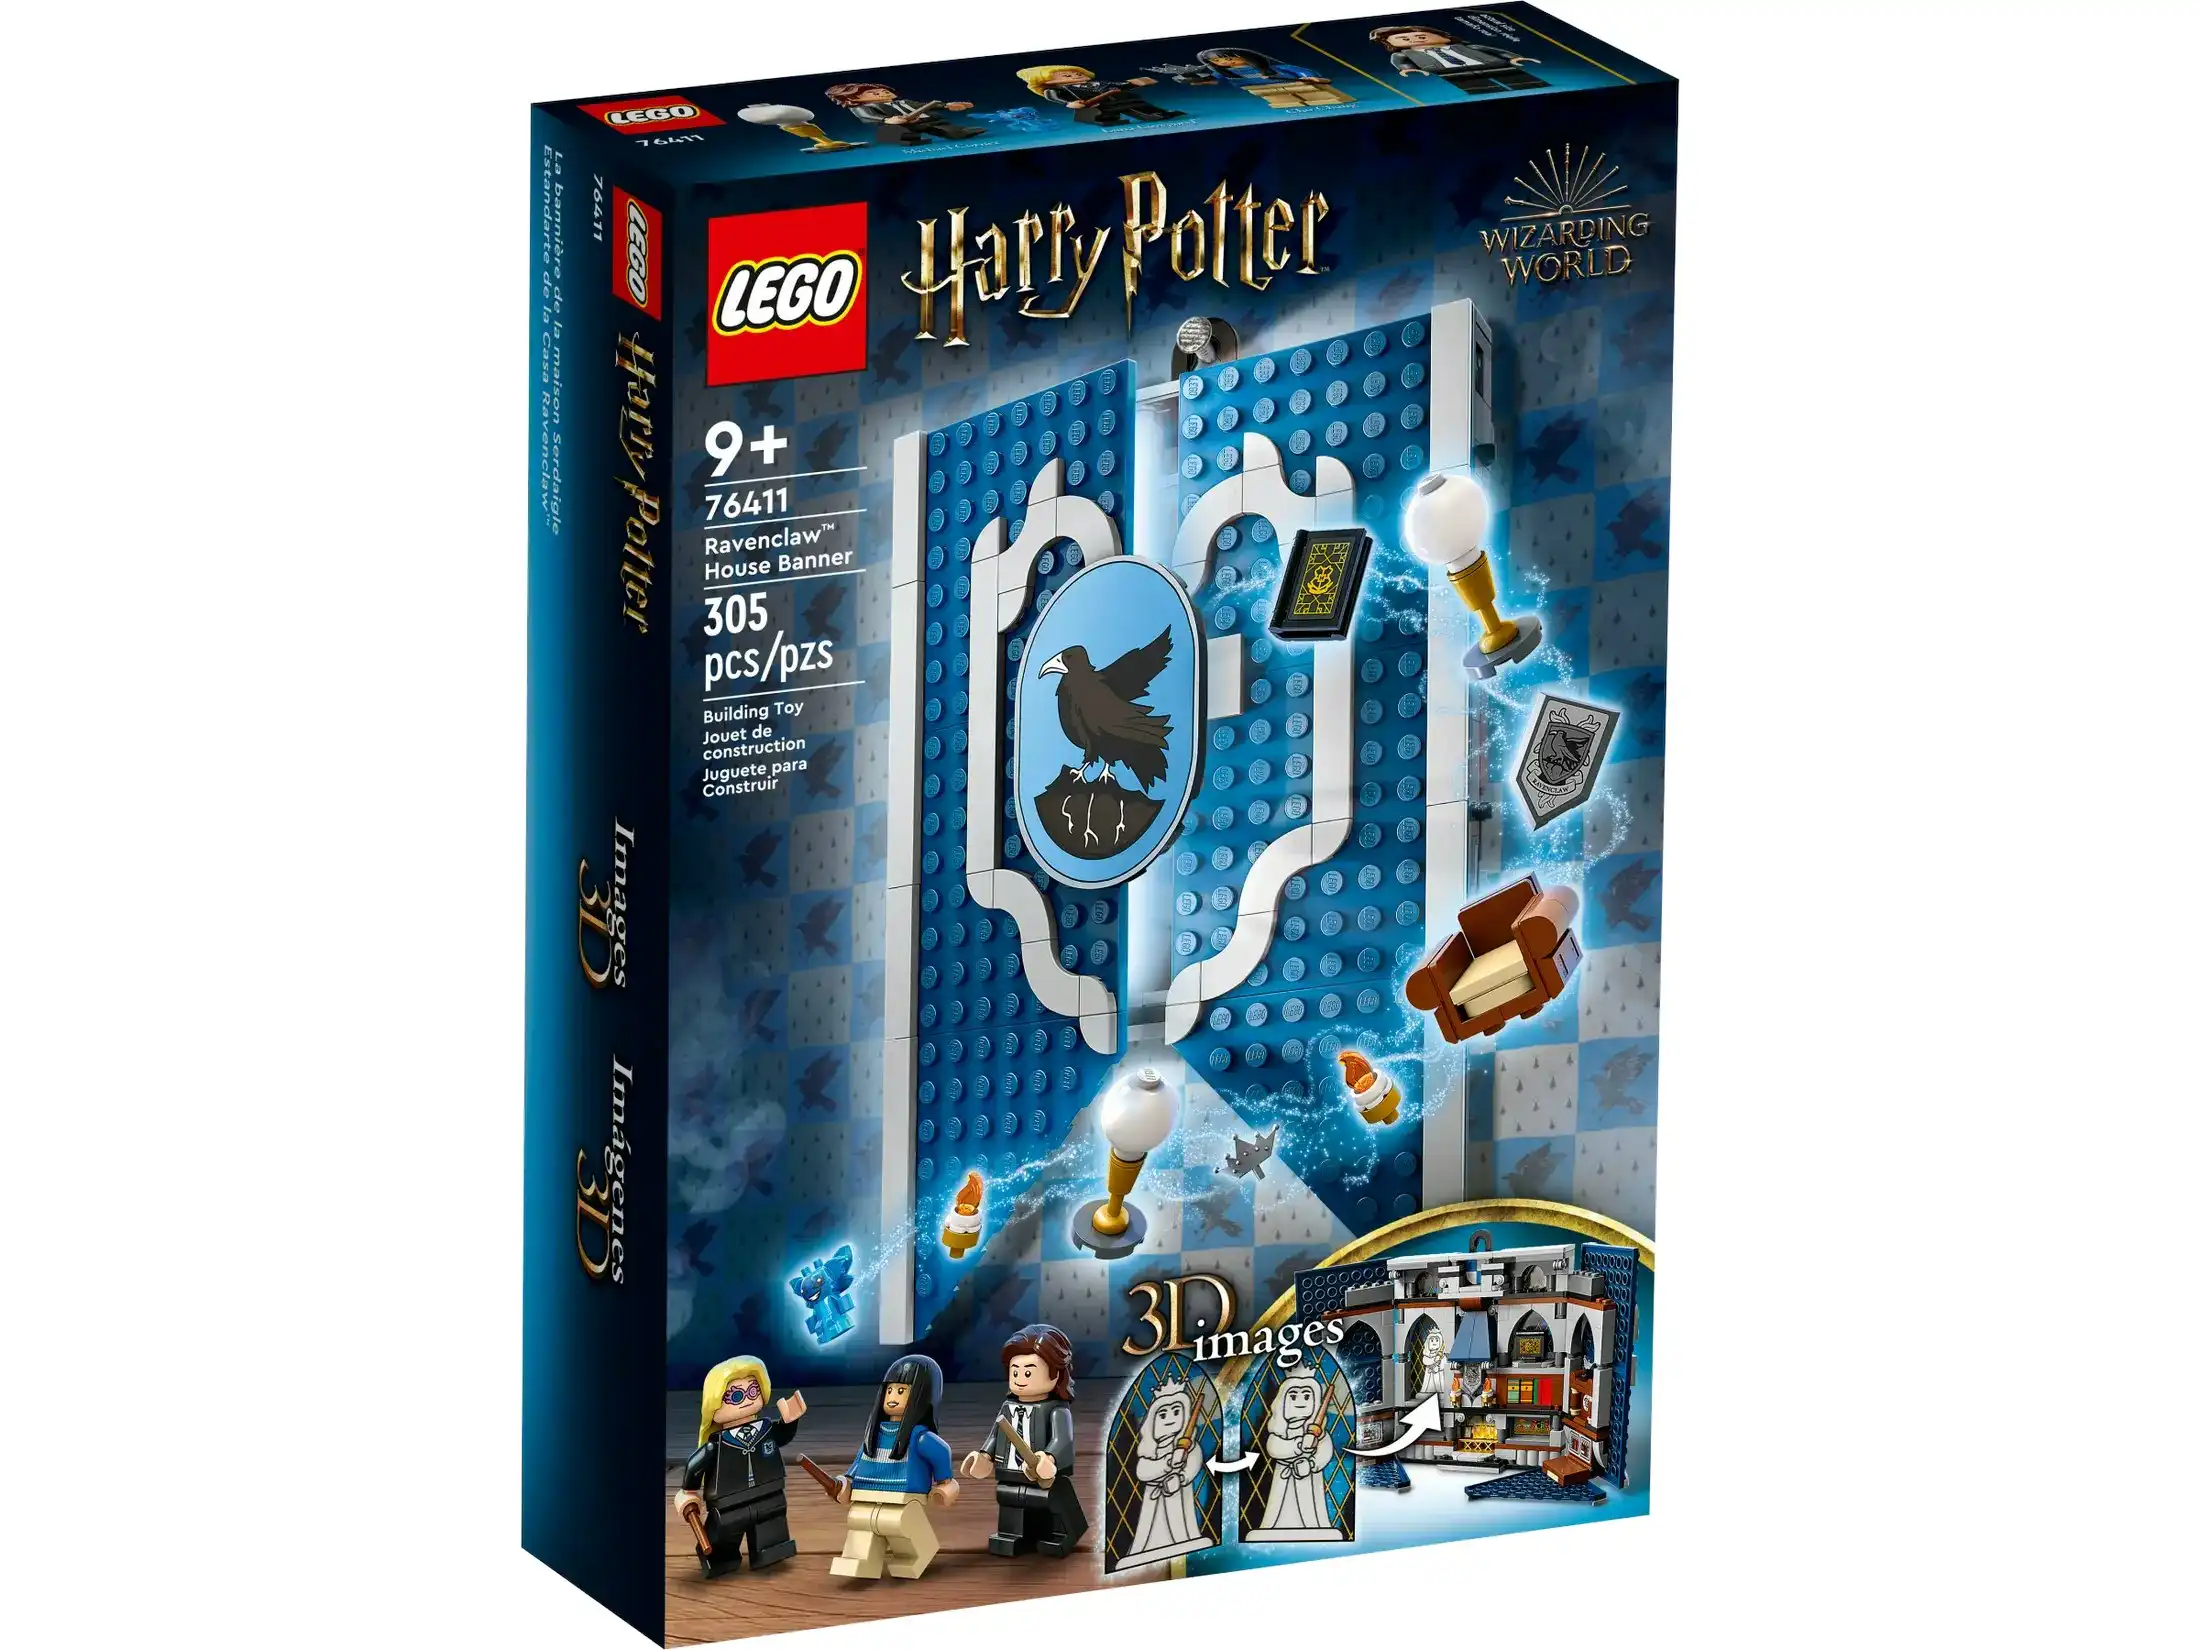 LEGO 76411 Ravenclaw House Banner - Harry Potter